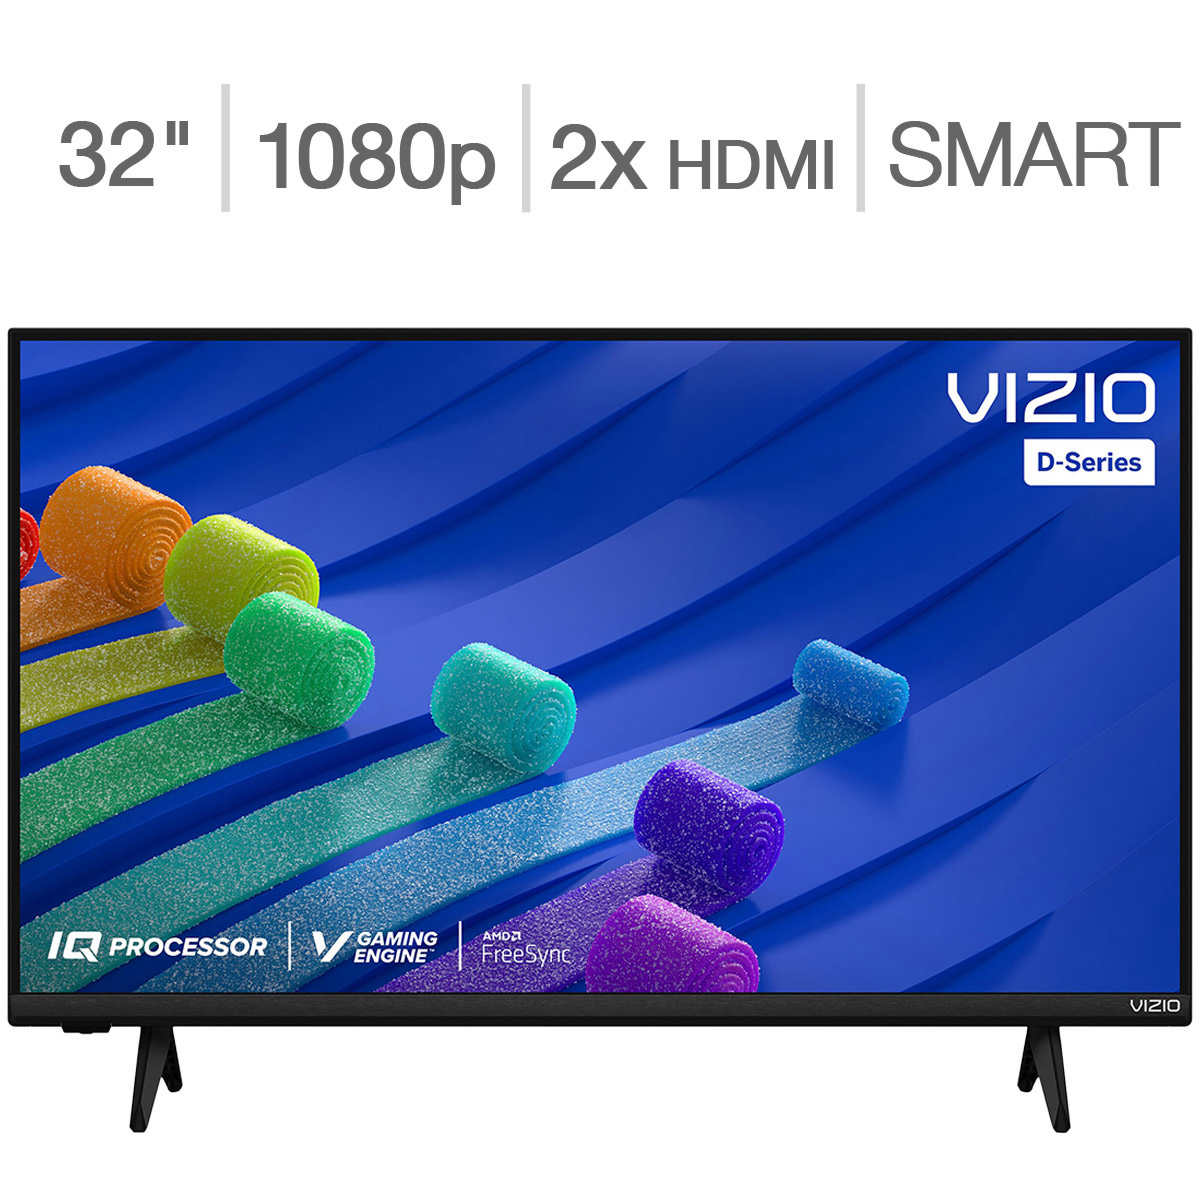 HDTV 1080p LED D-Series 32" Class Smart VIZIO 